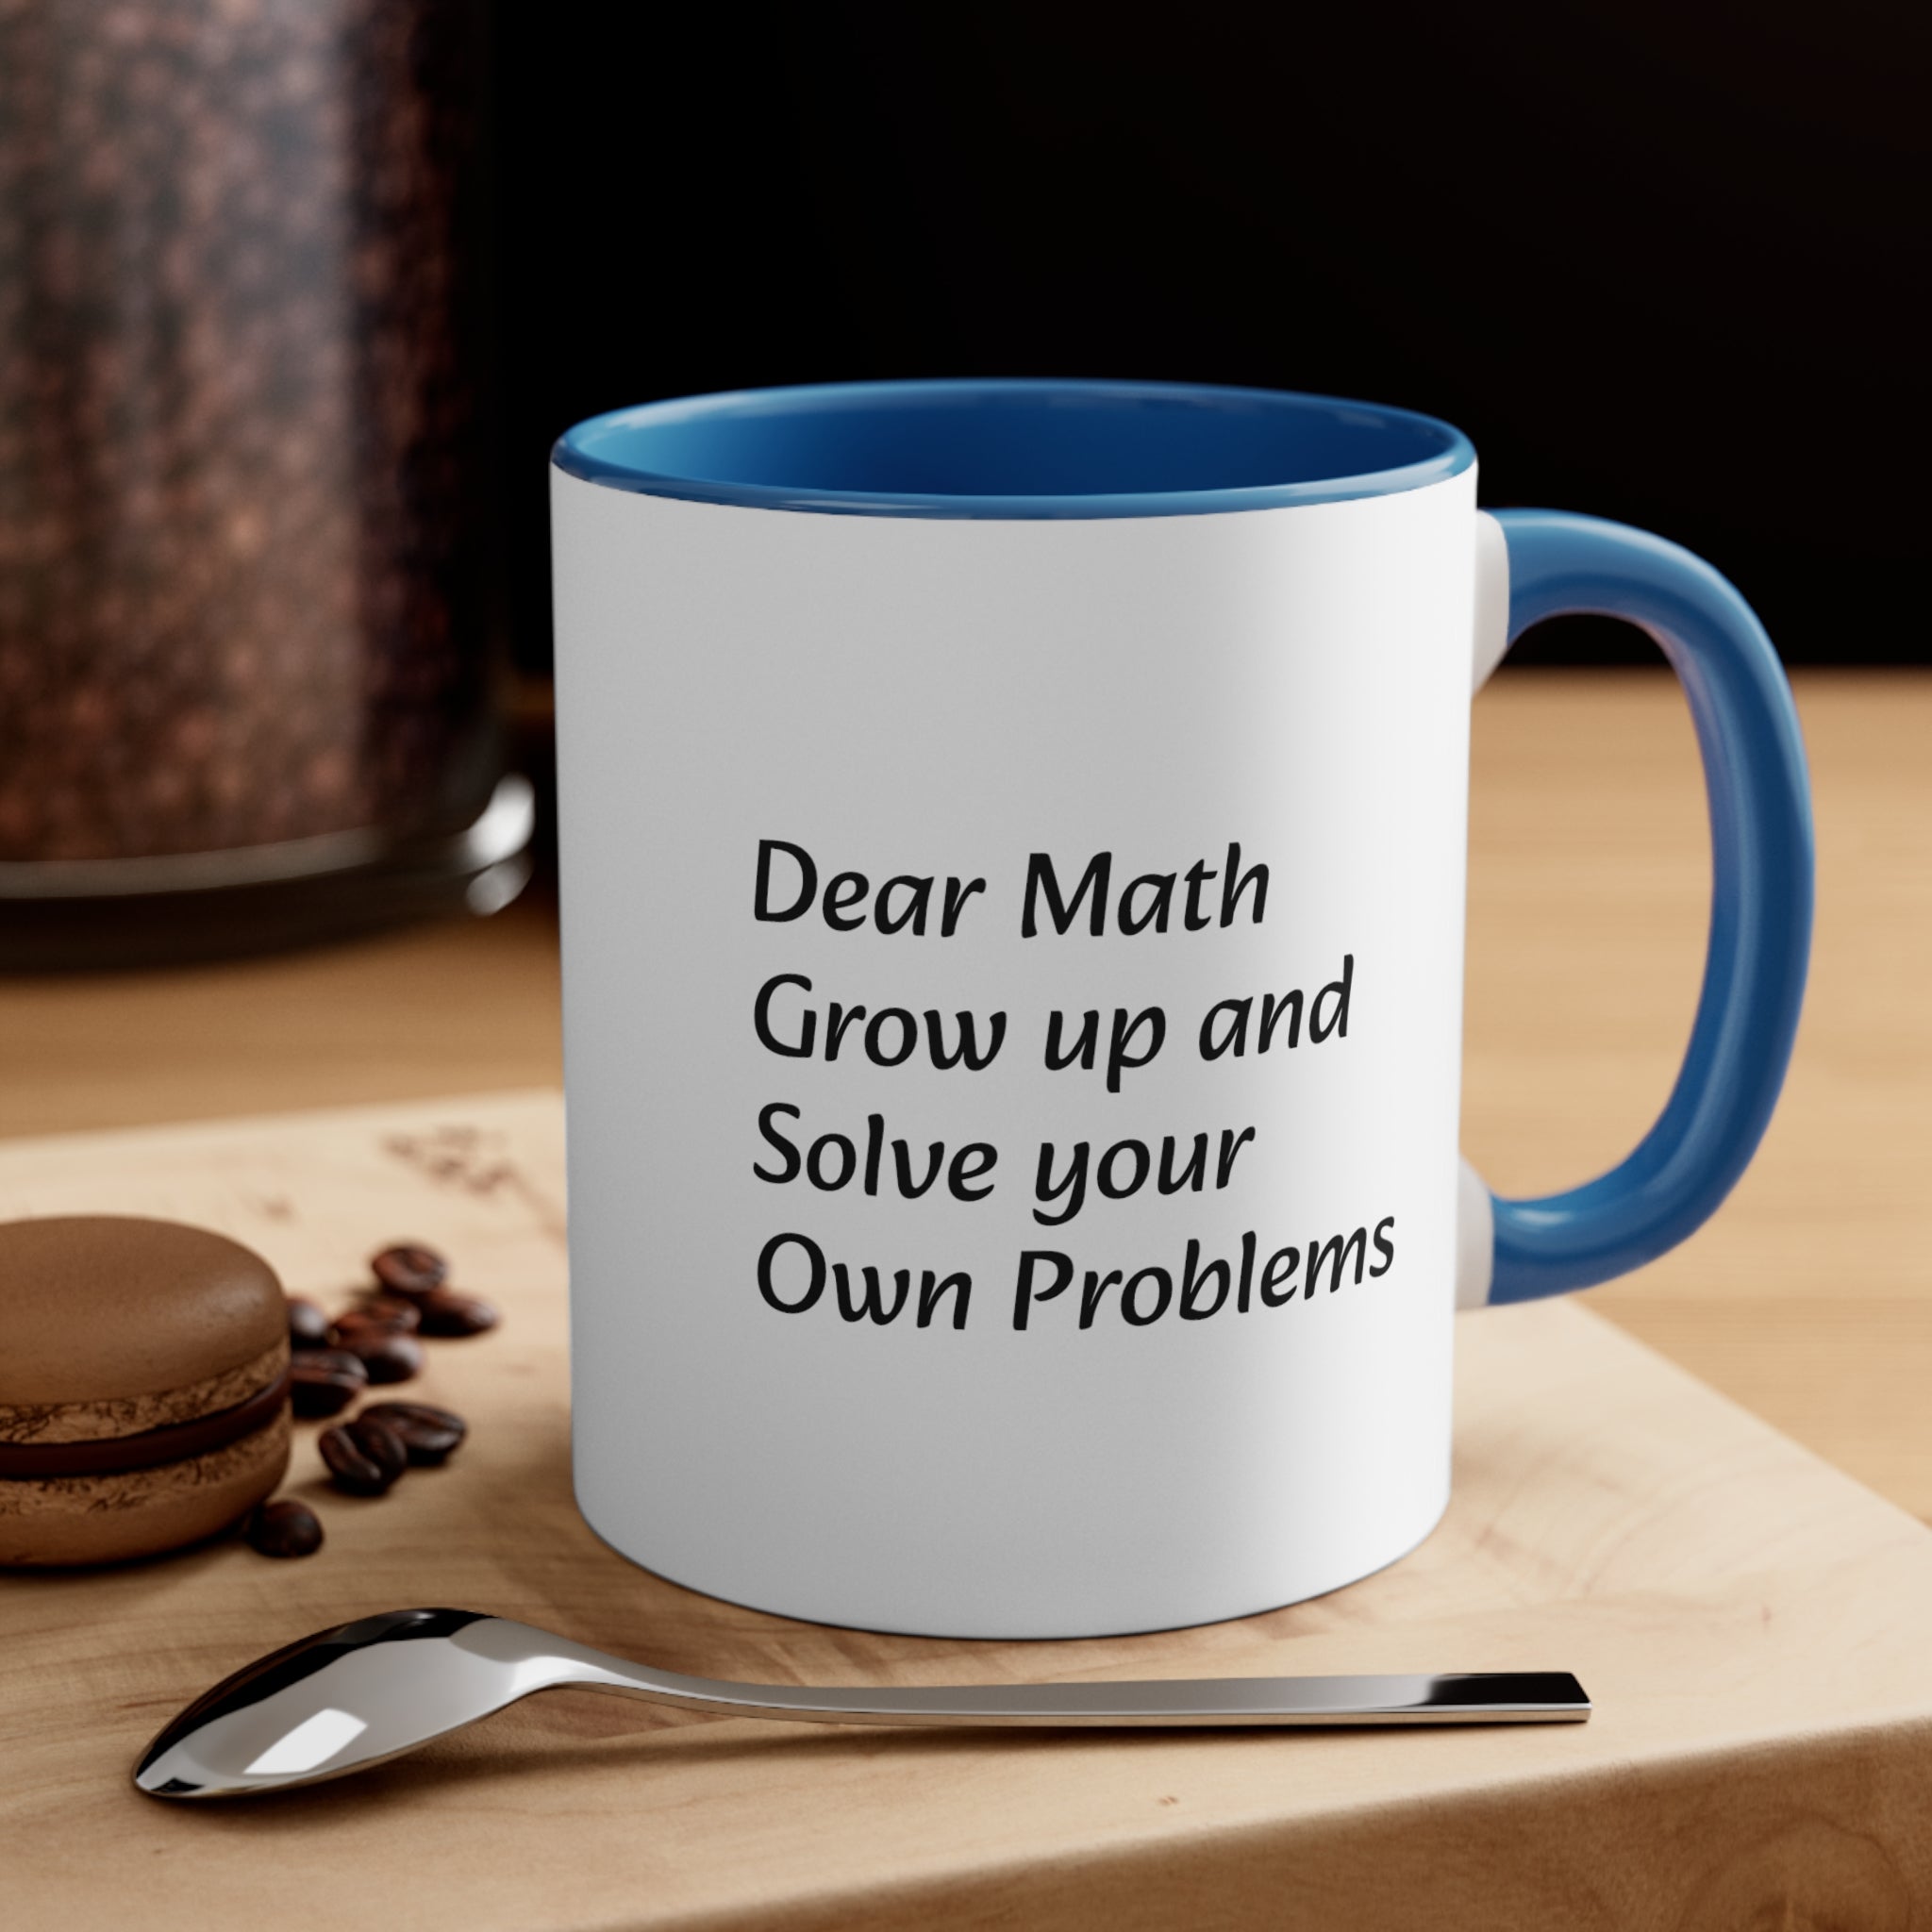 Dear Math Grow Up And Solve Your Own Problems Coffee Mug, 11oz - KNACK